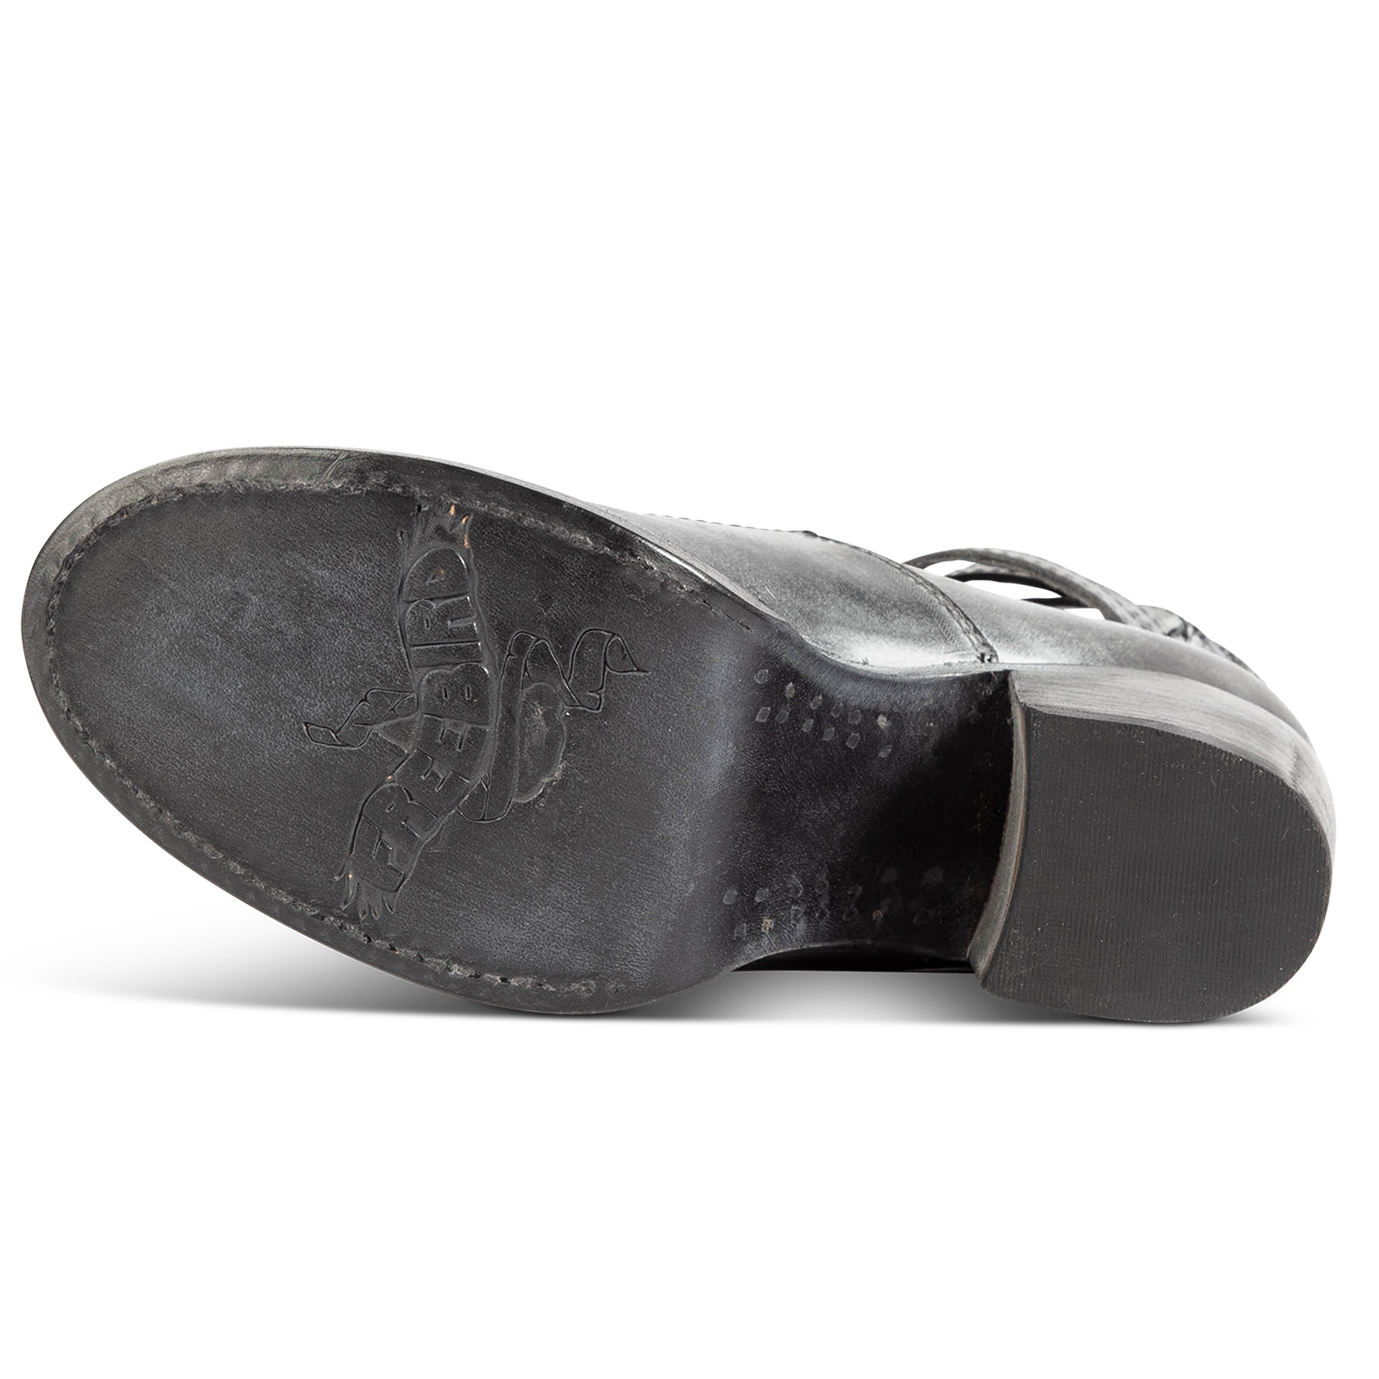 Leather sole imprinted with FREEBIRD on women’s Randi black leather shoe